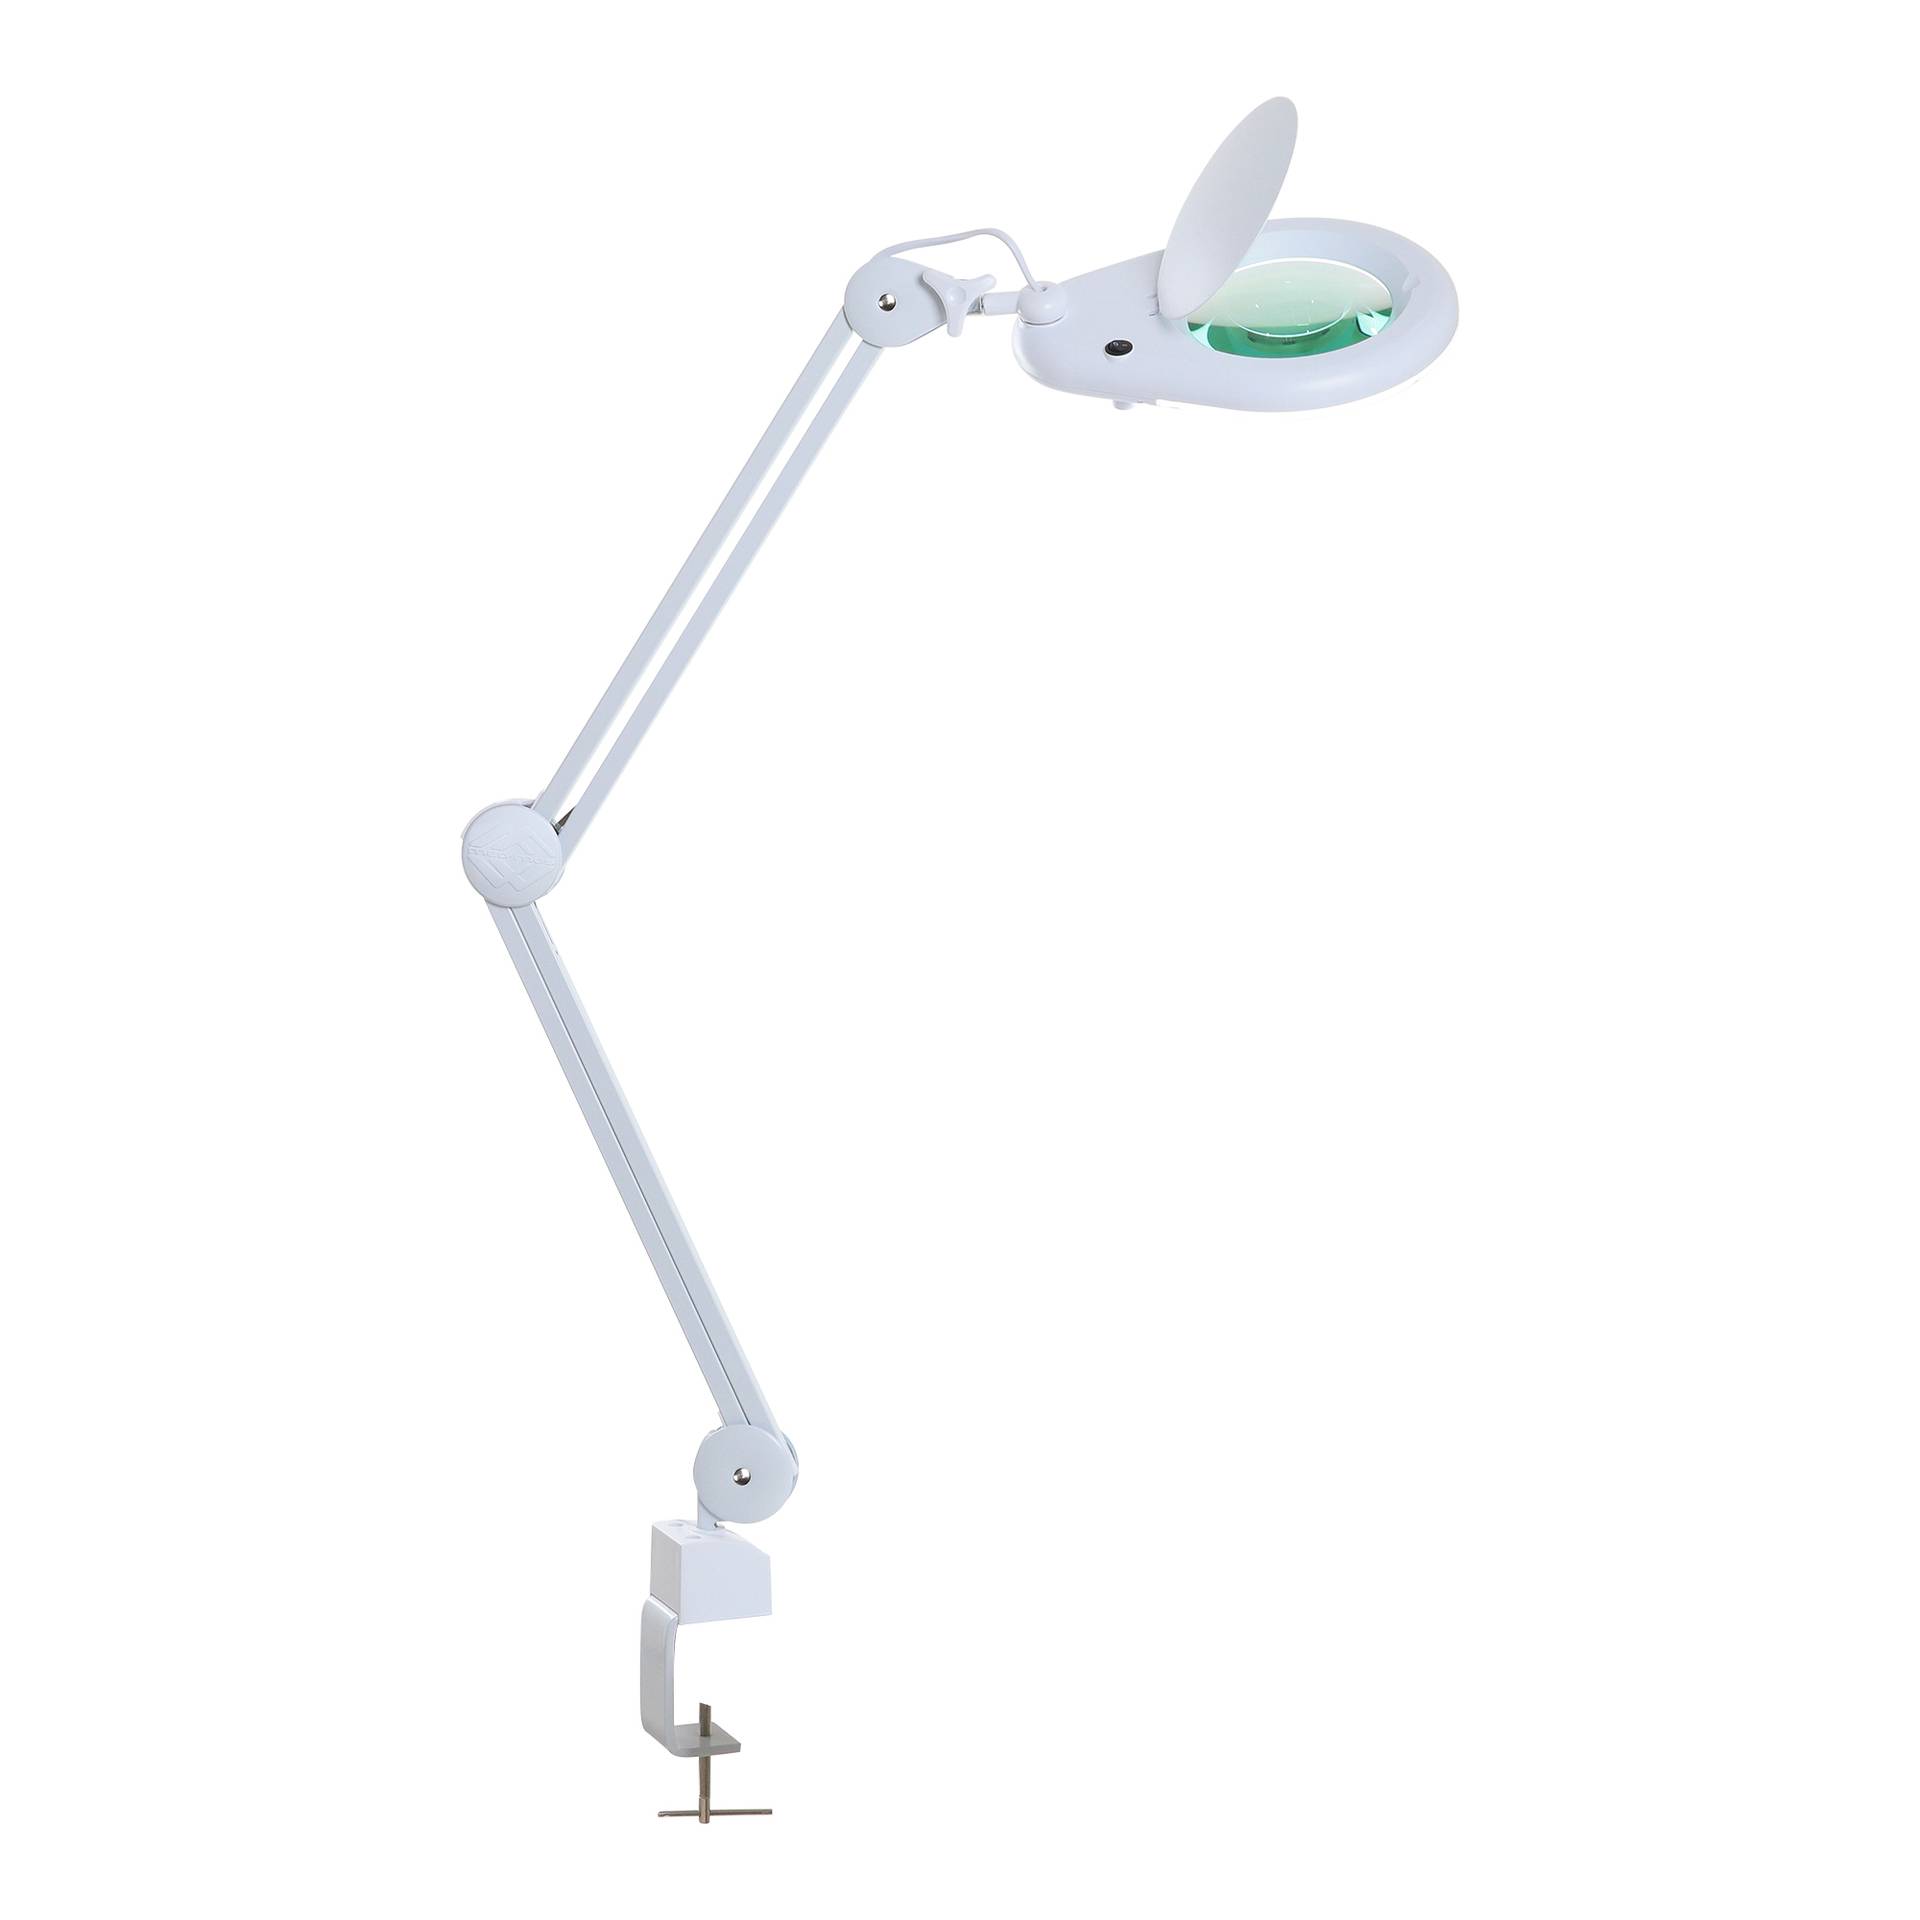 Лампа бестеневая с РУ (лампа-лупа) Med-Mos 9005LED (9005LED) медицинская, с регулировкой угла